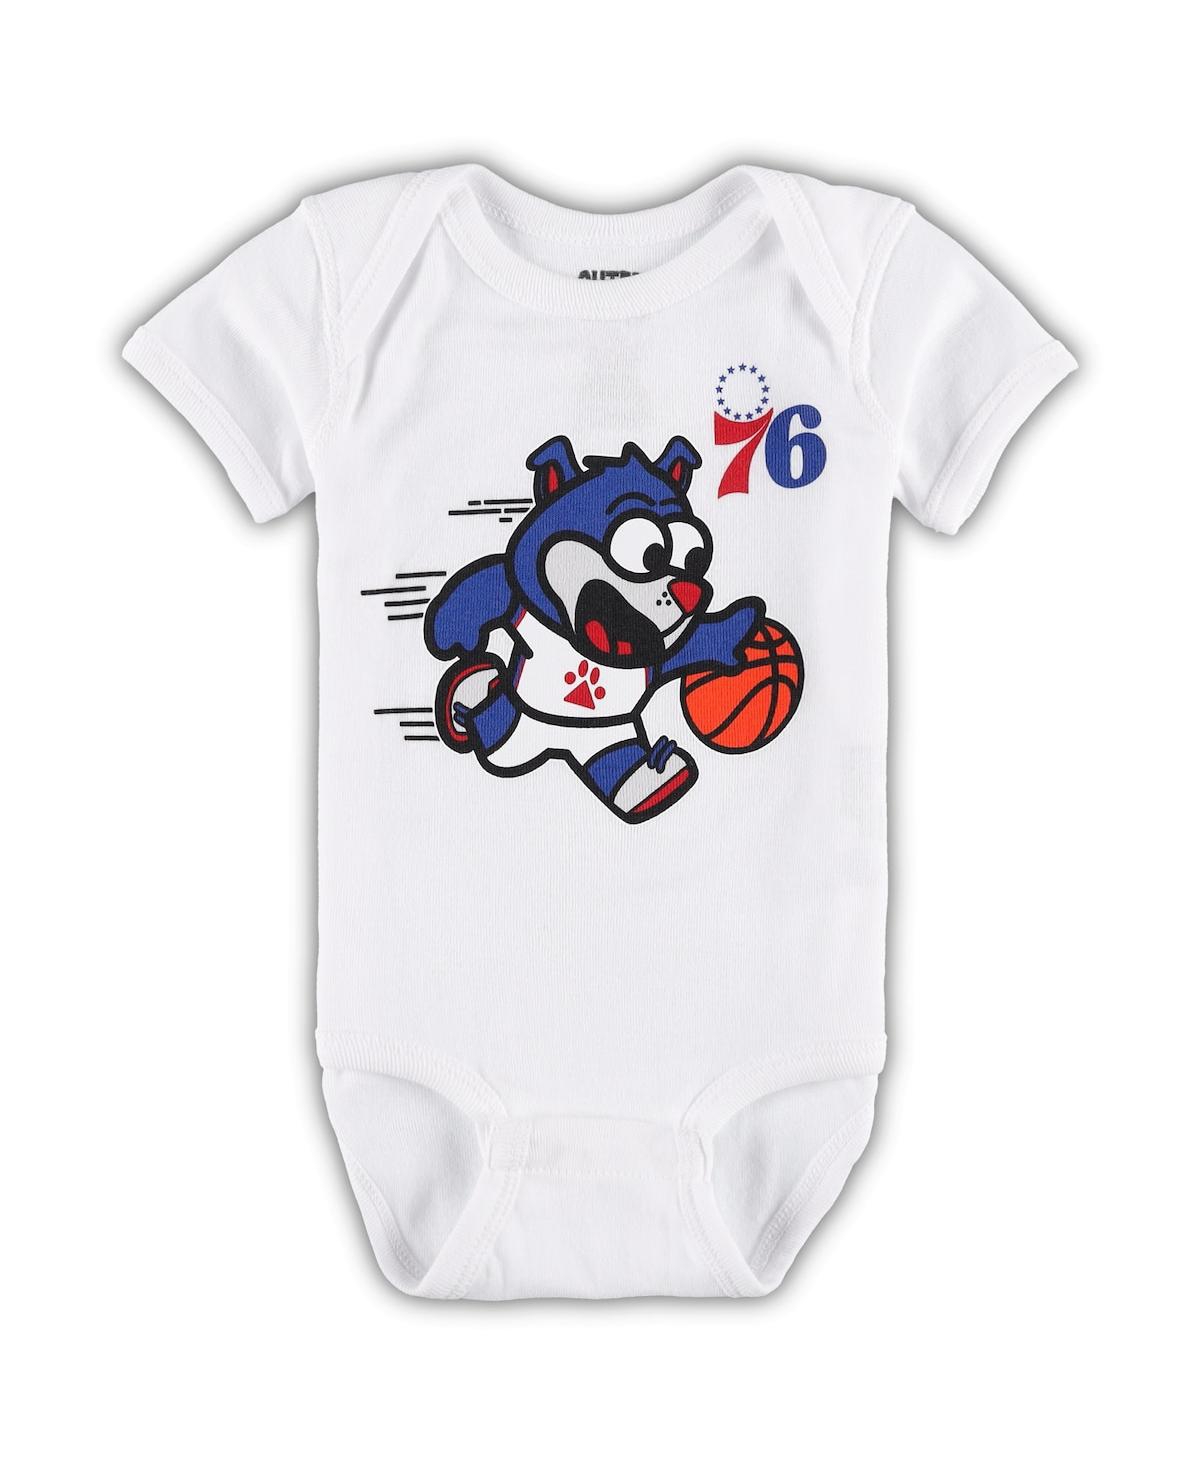 Outerstuff Babies' Infant Boys And Girls White Philadelphia 76ers Mascot Bodysuit